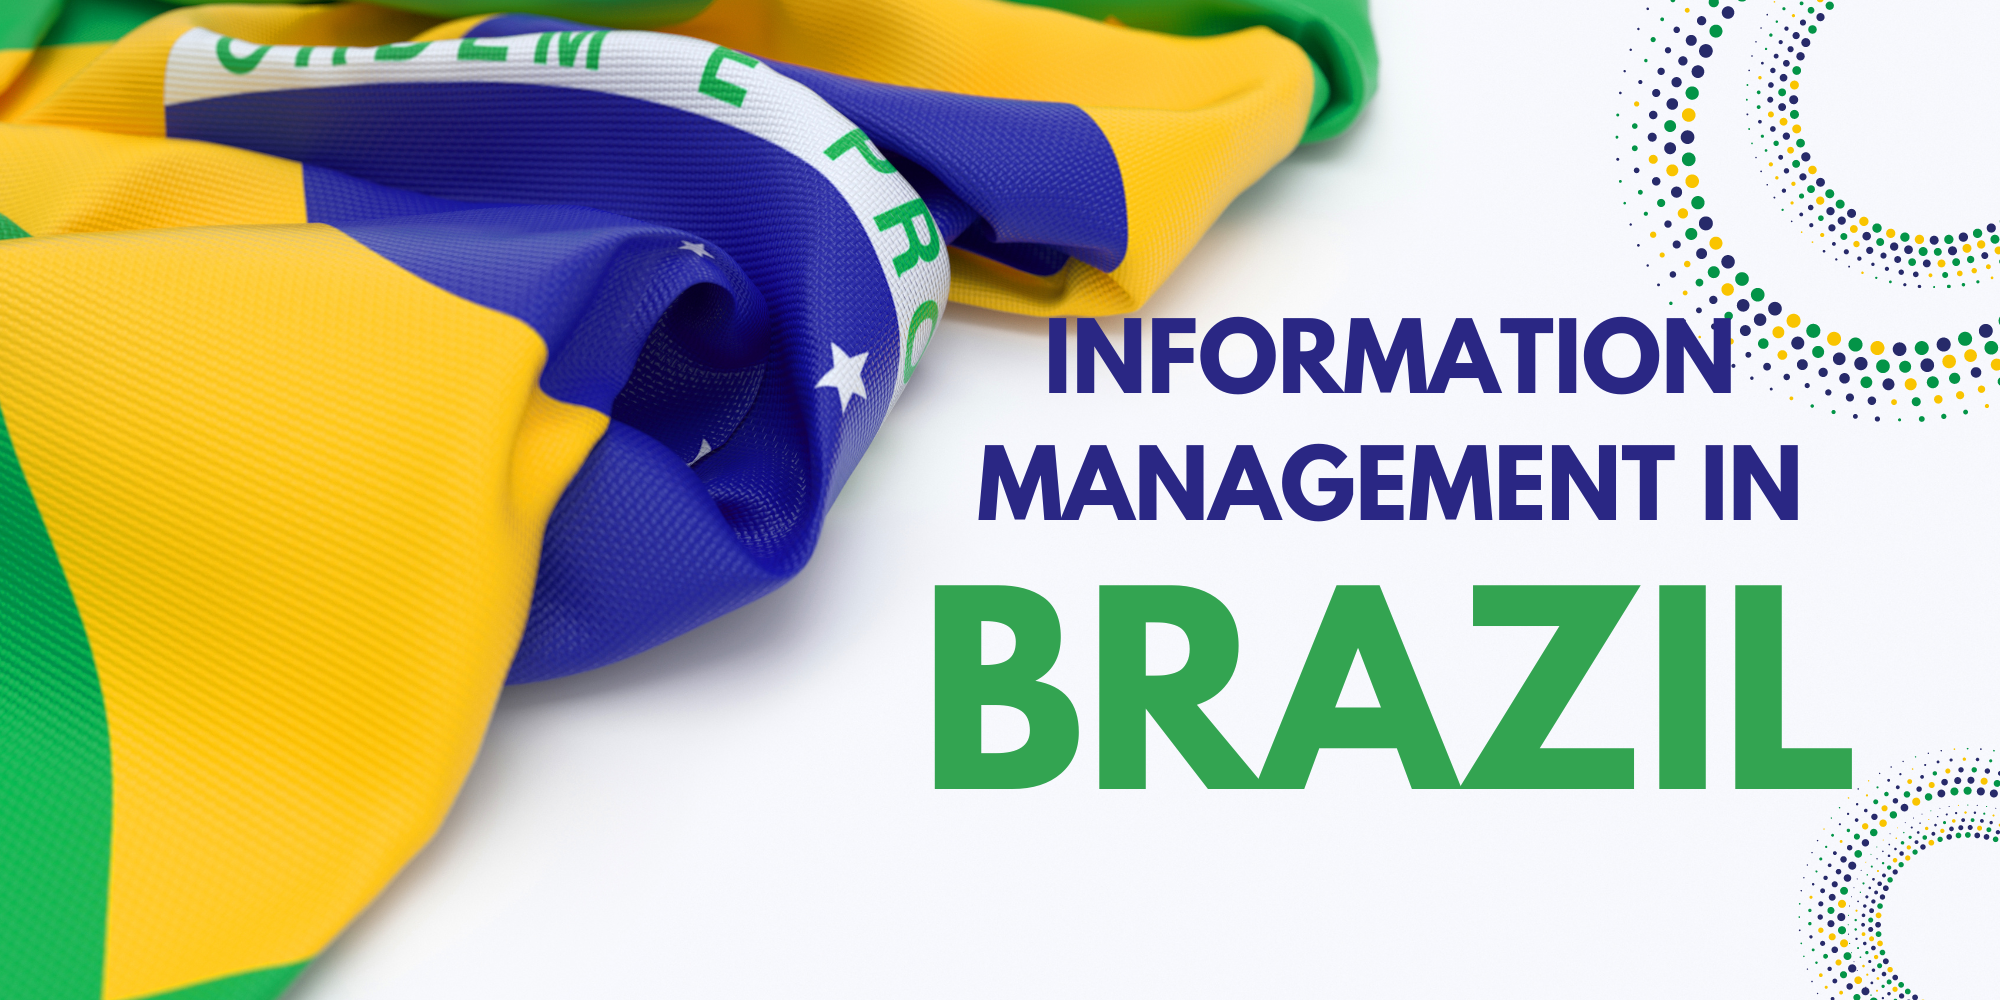 Information Management in Brazil